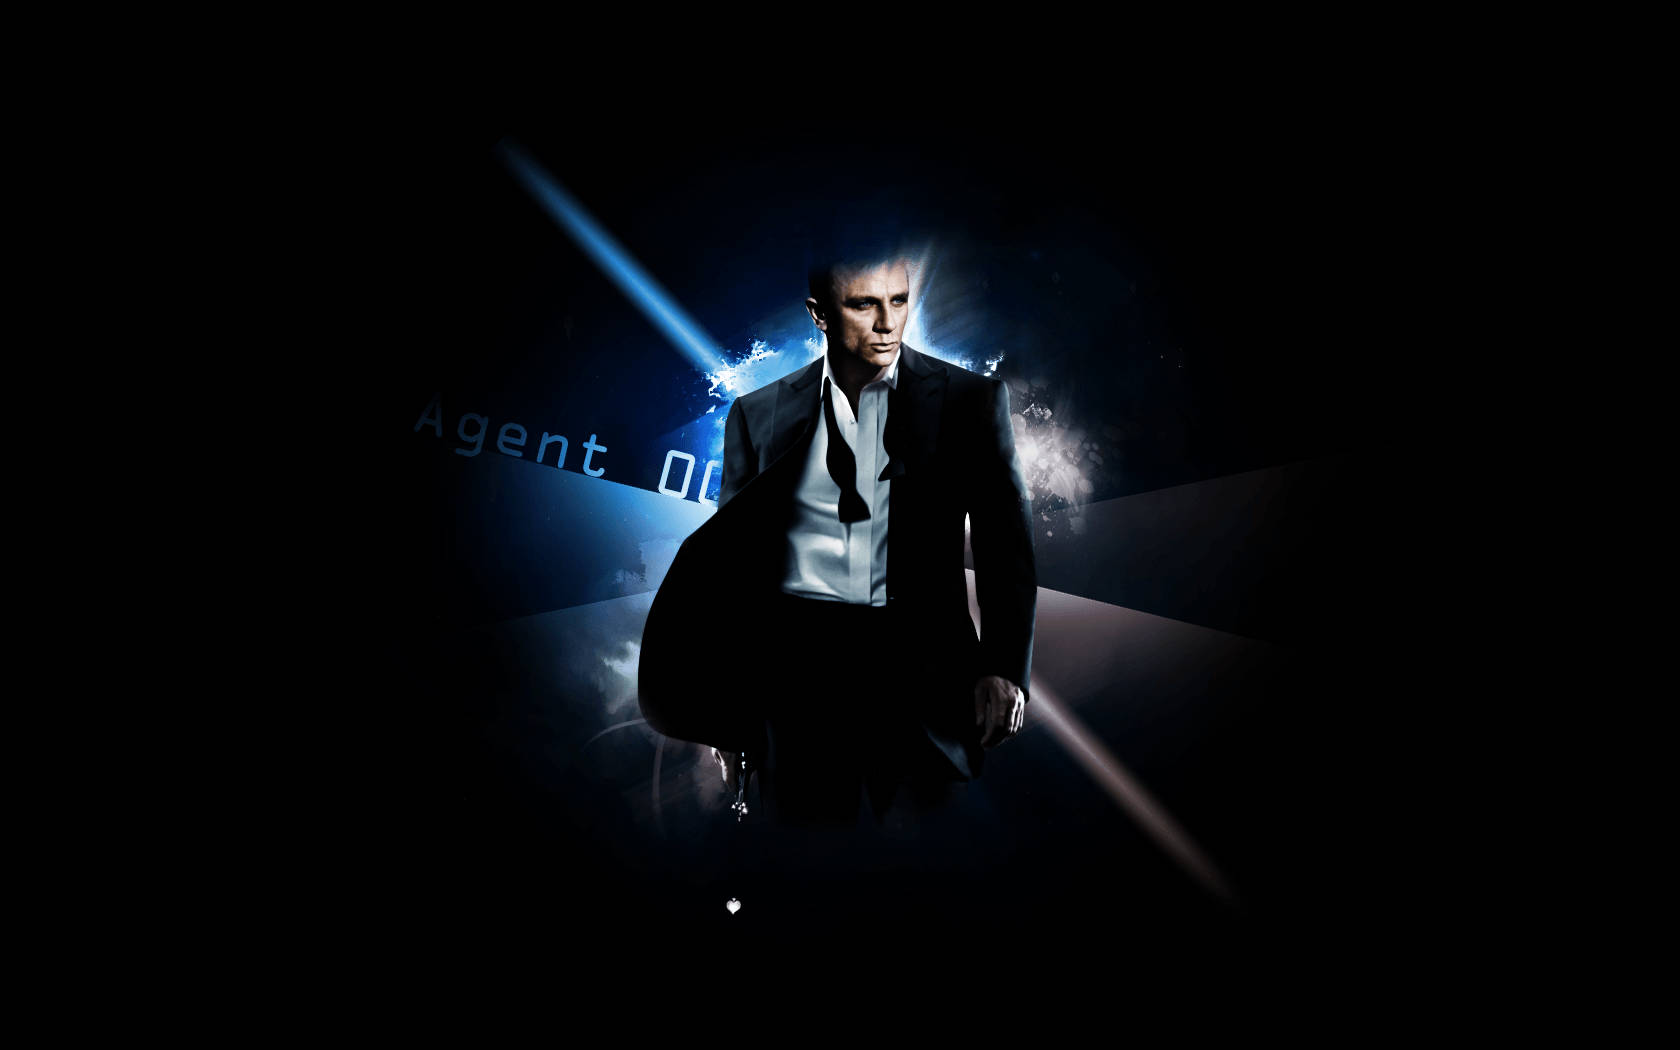 James Bond, The Unforgettable Agent 007